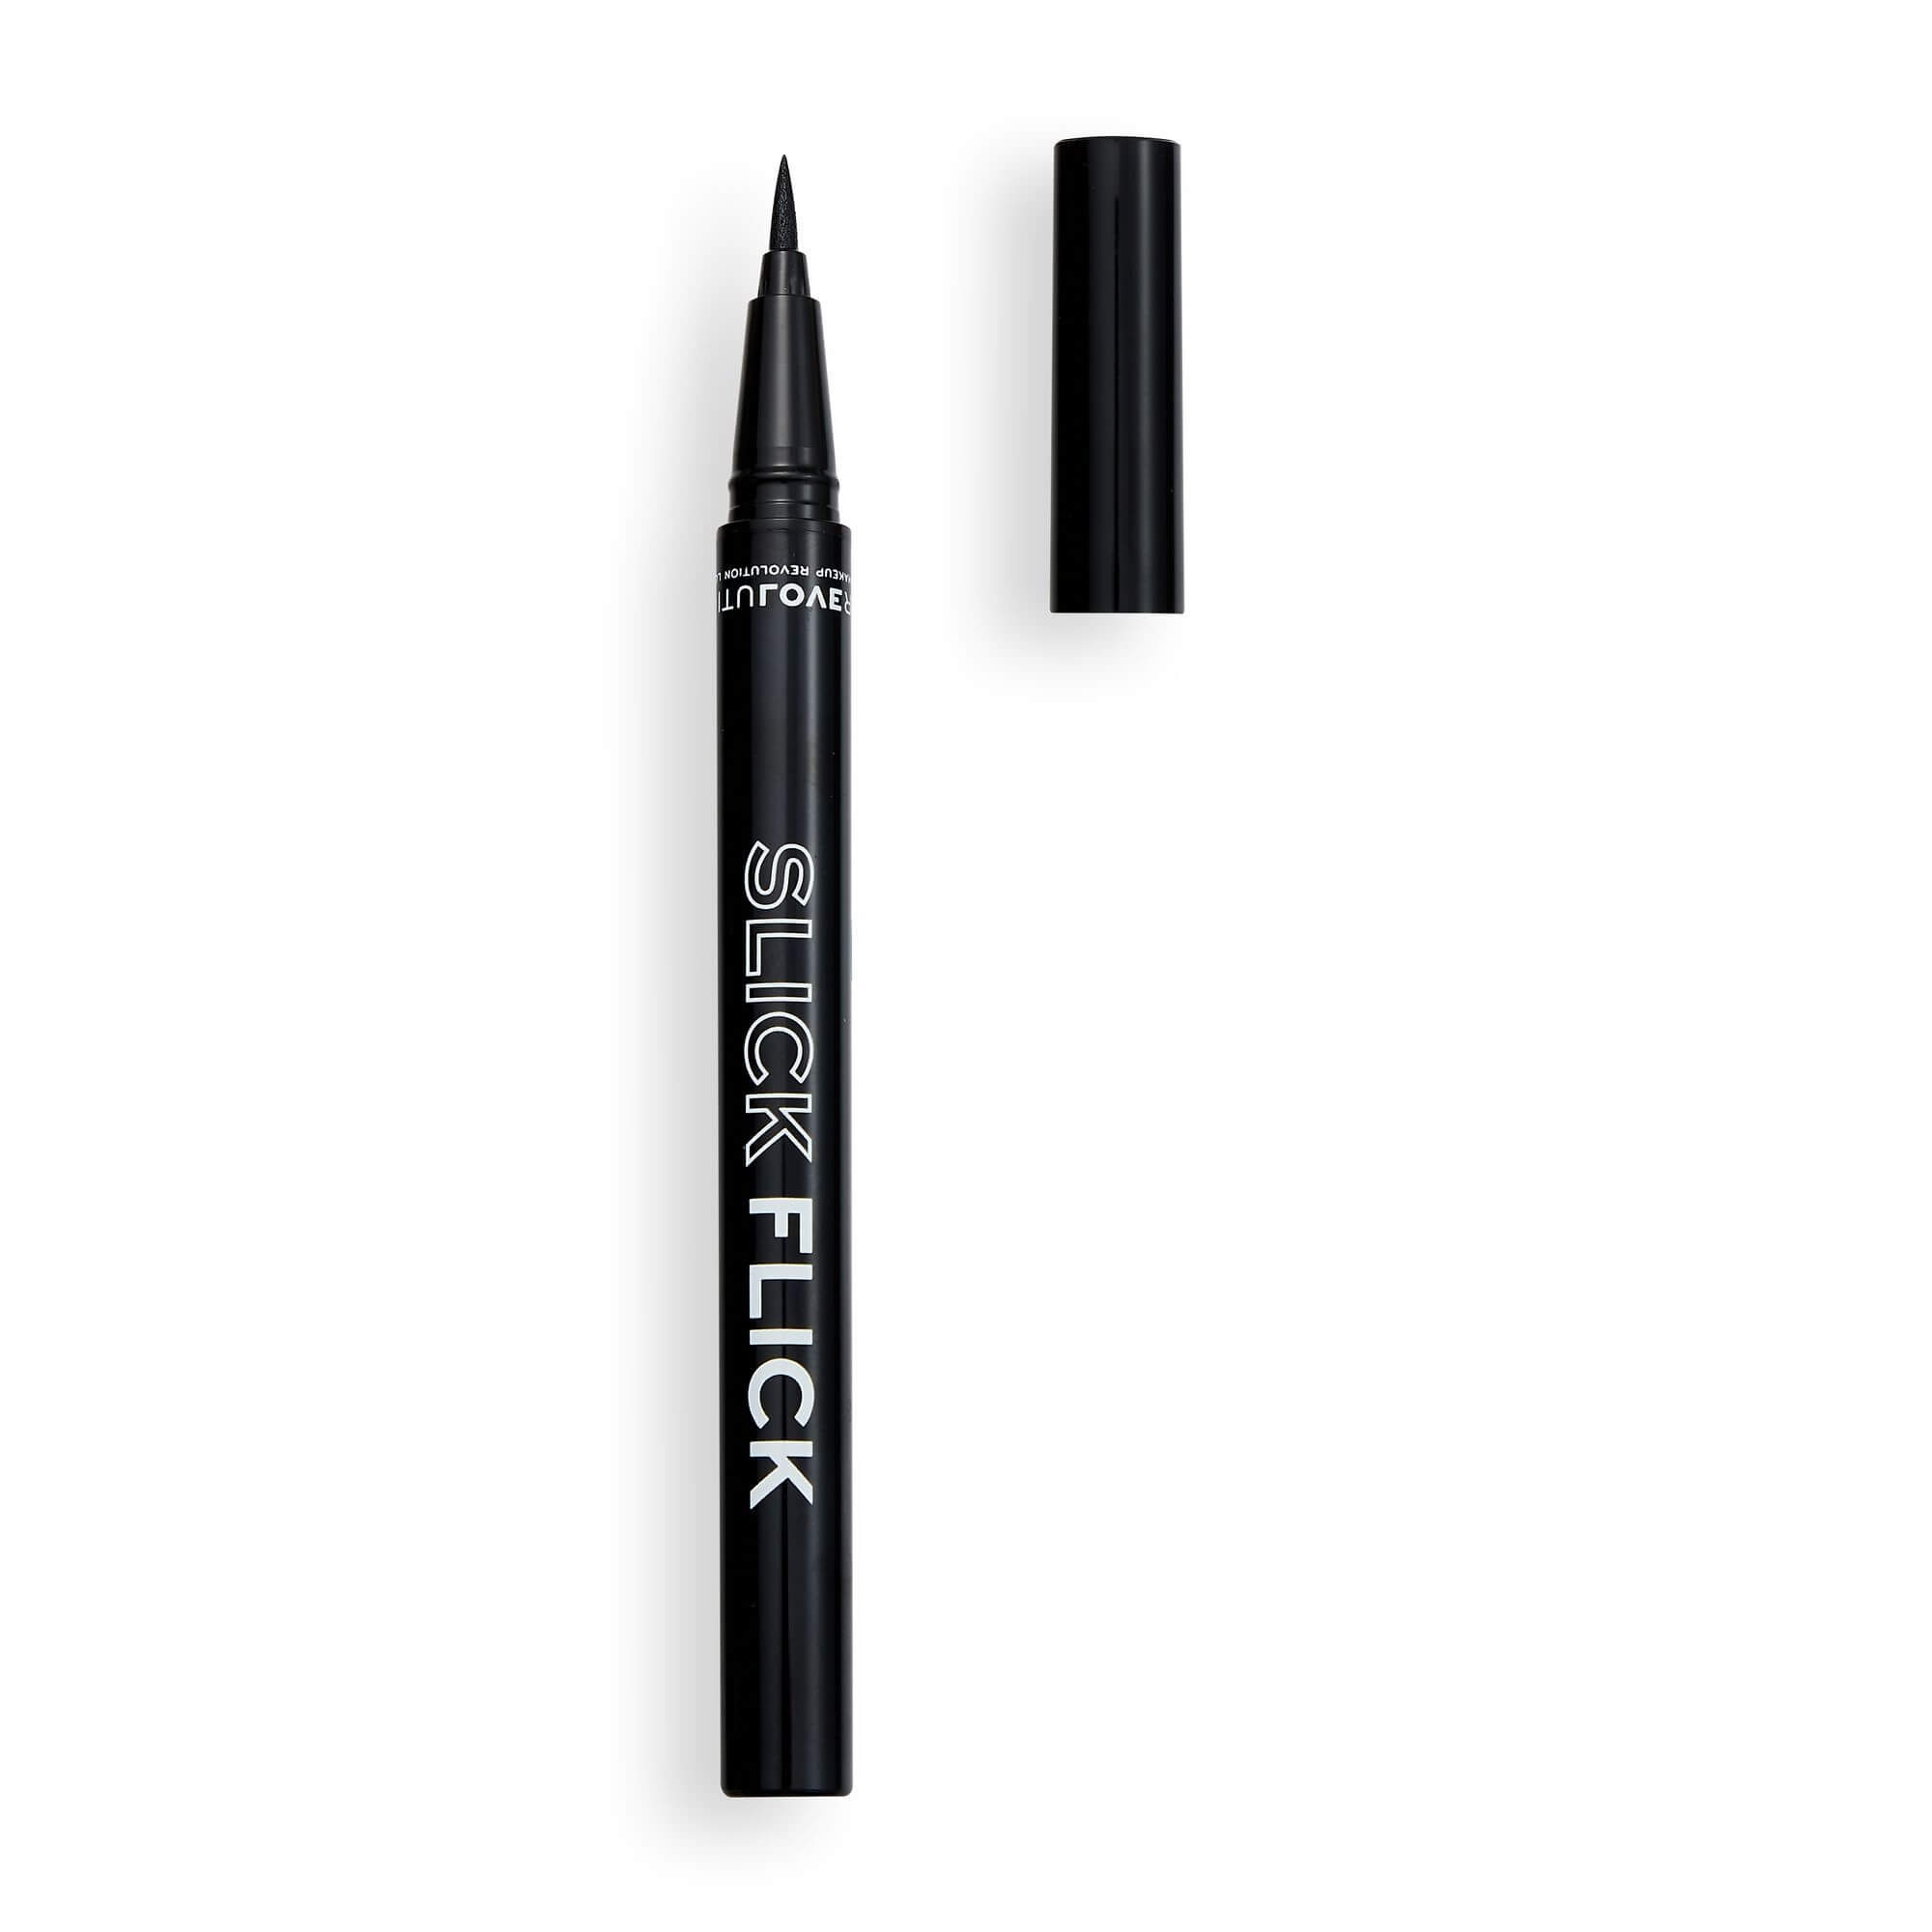 Revolution Očné linky Relove Slick Flick Black (Eyeliner) 0,7 g